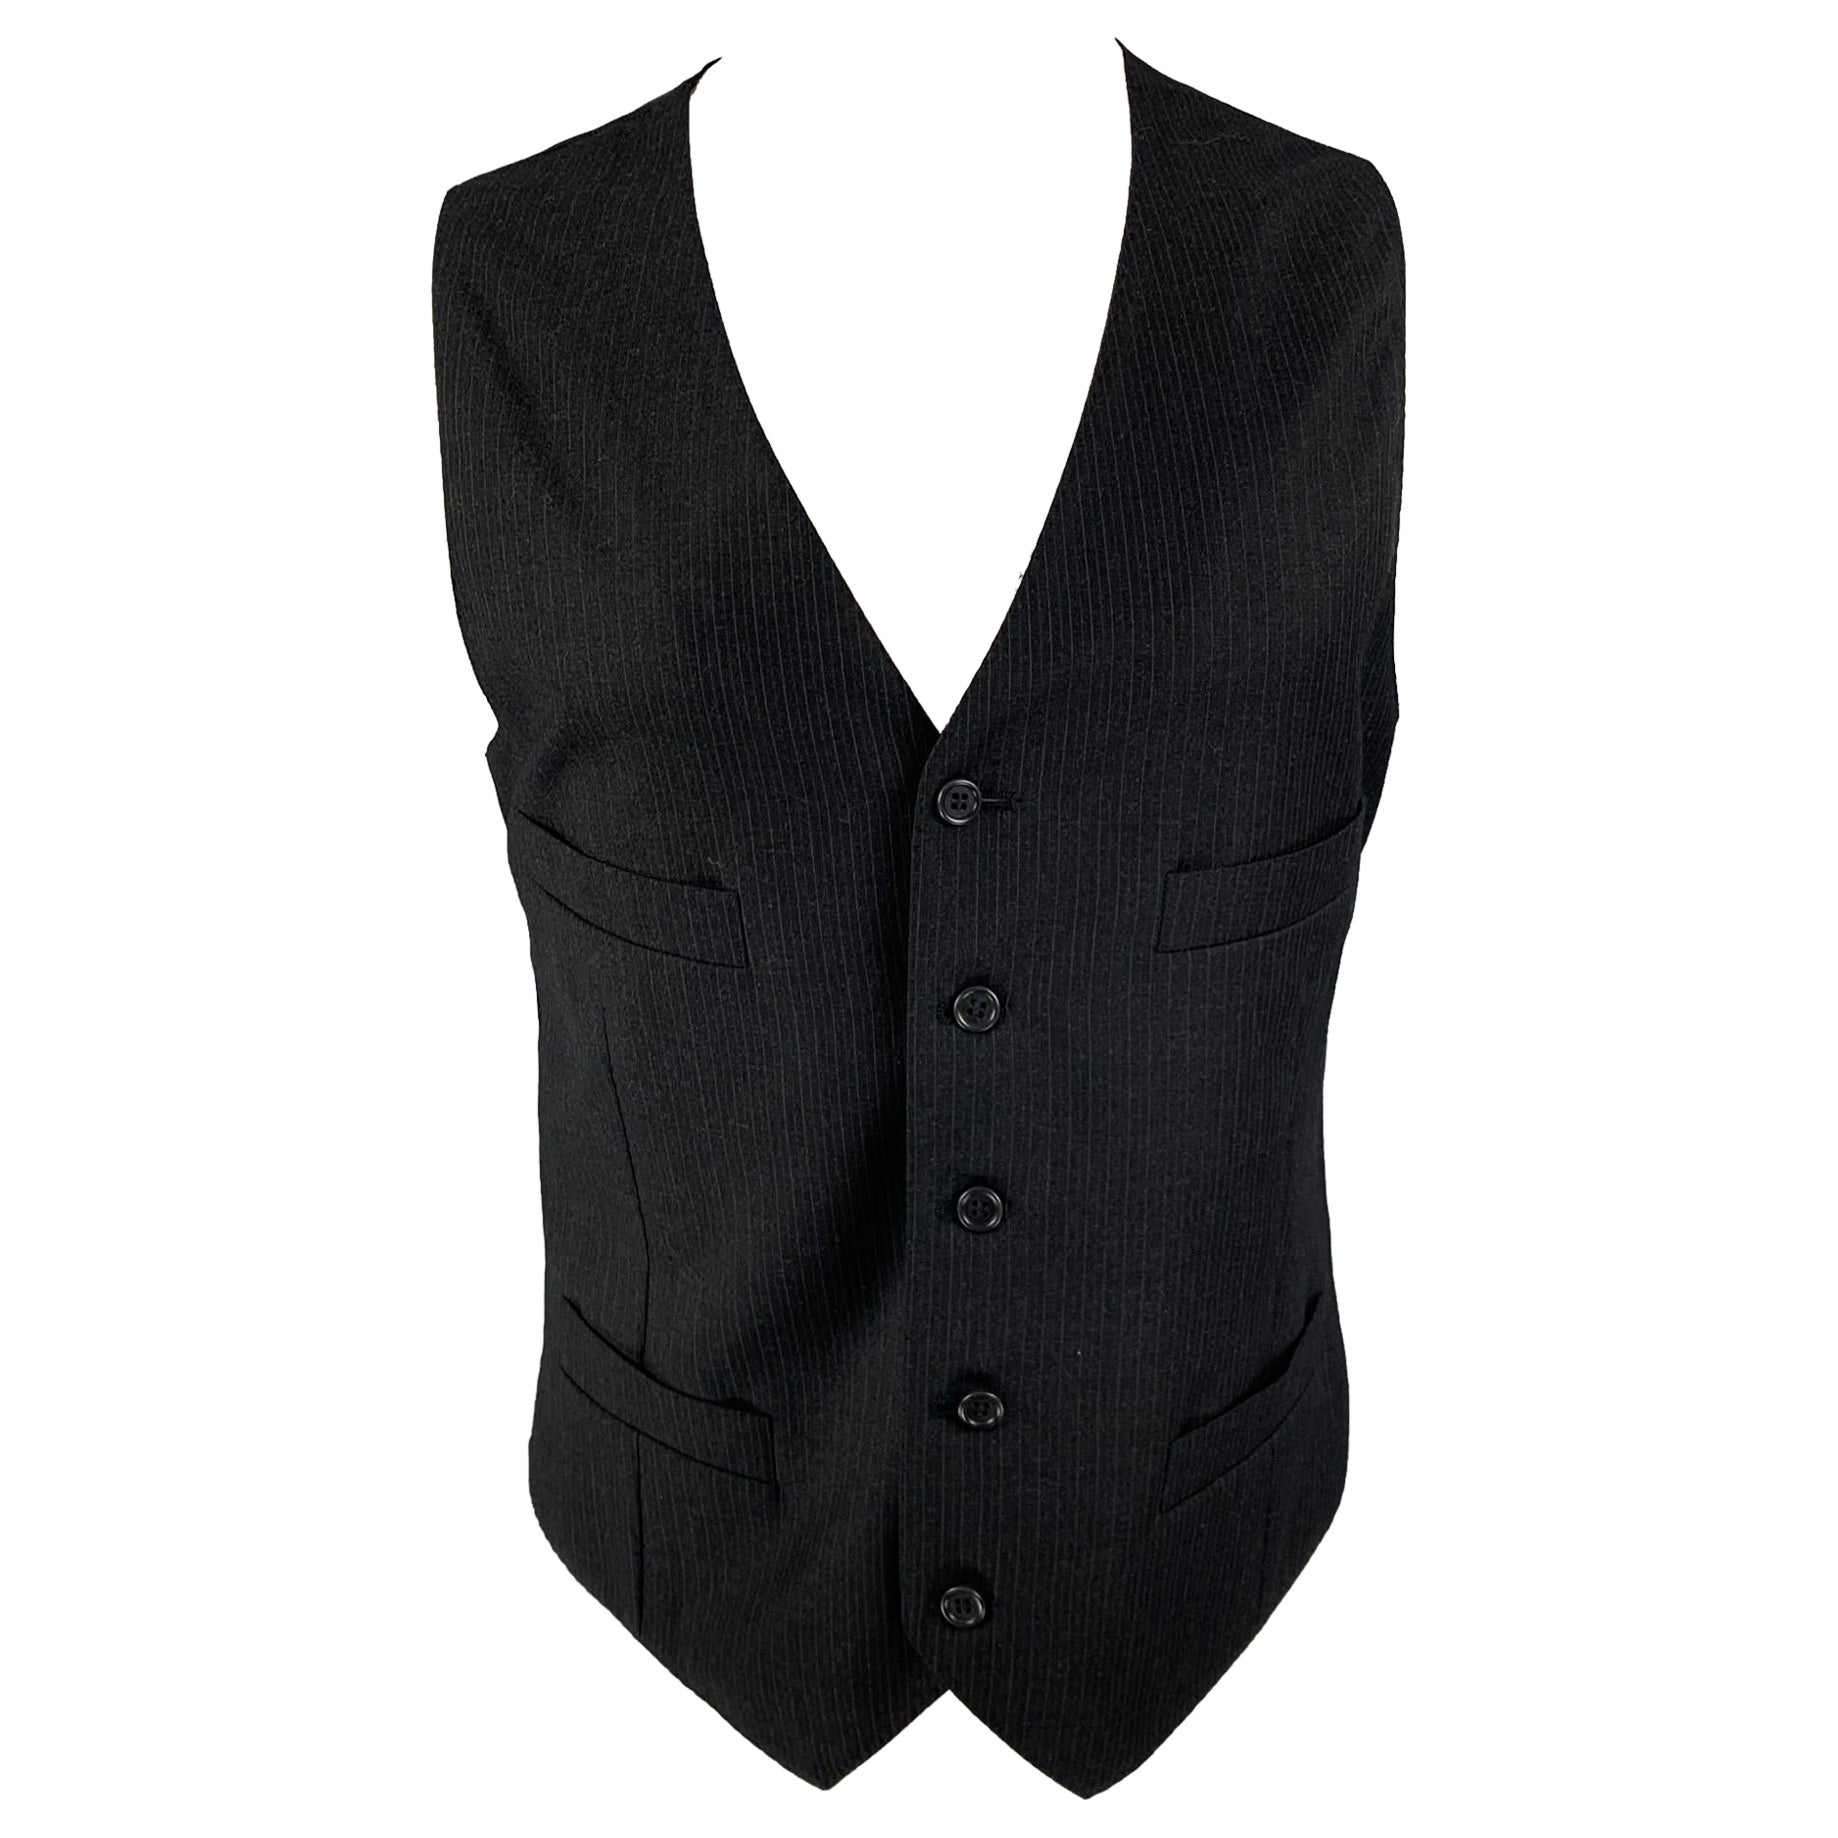 GIORGIO ARMANI Size 42 Charcoal Pinstripe Wool Buttoned Vest